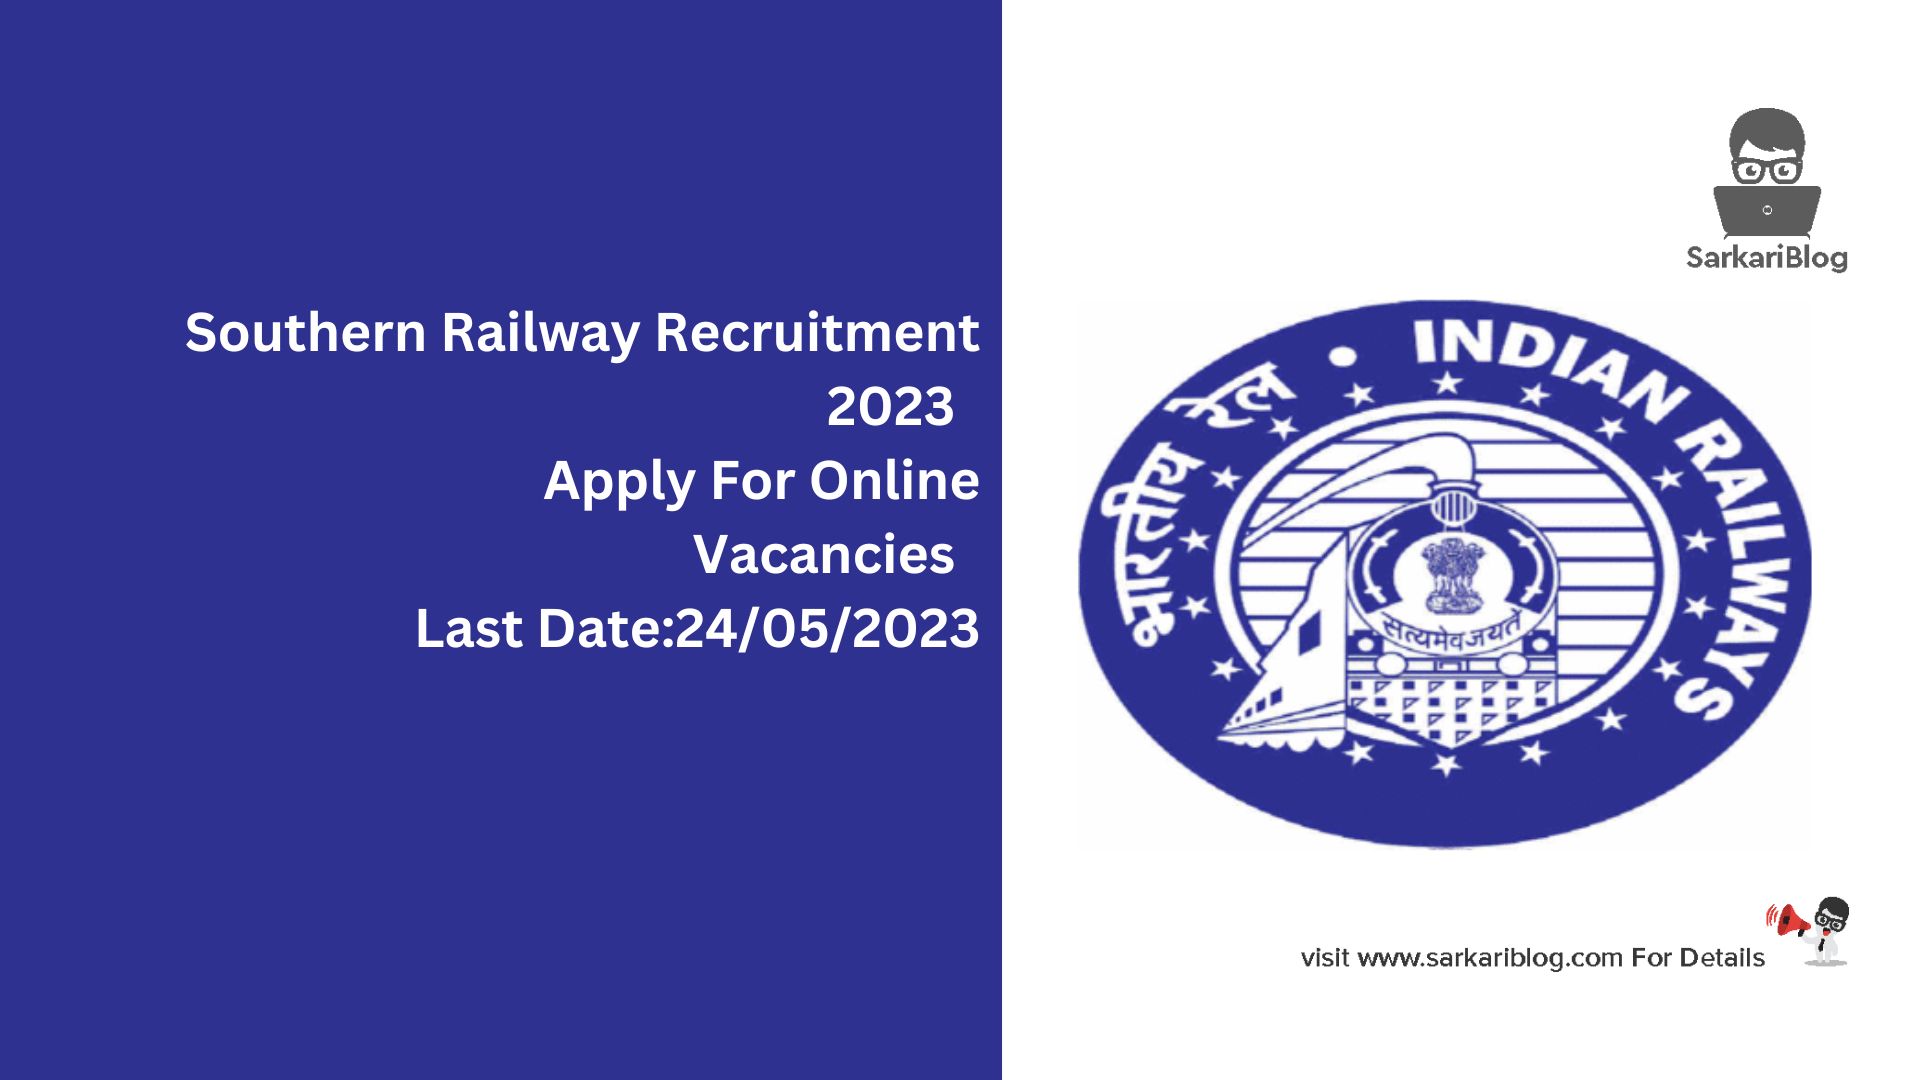 Southern Railway Recruitment 2023